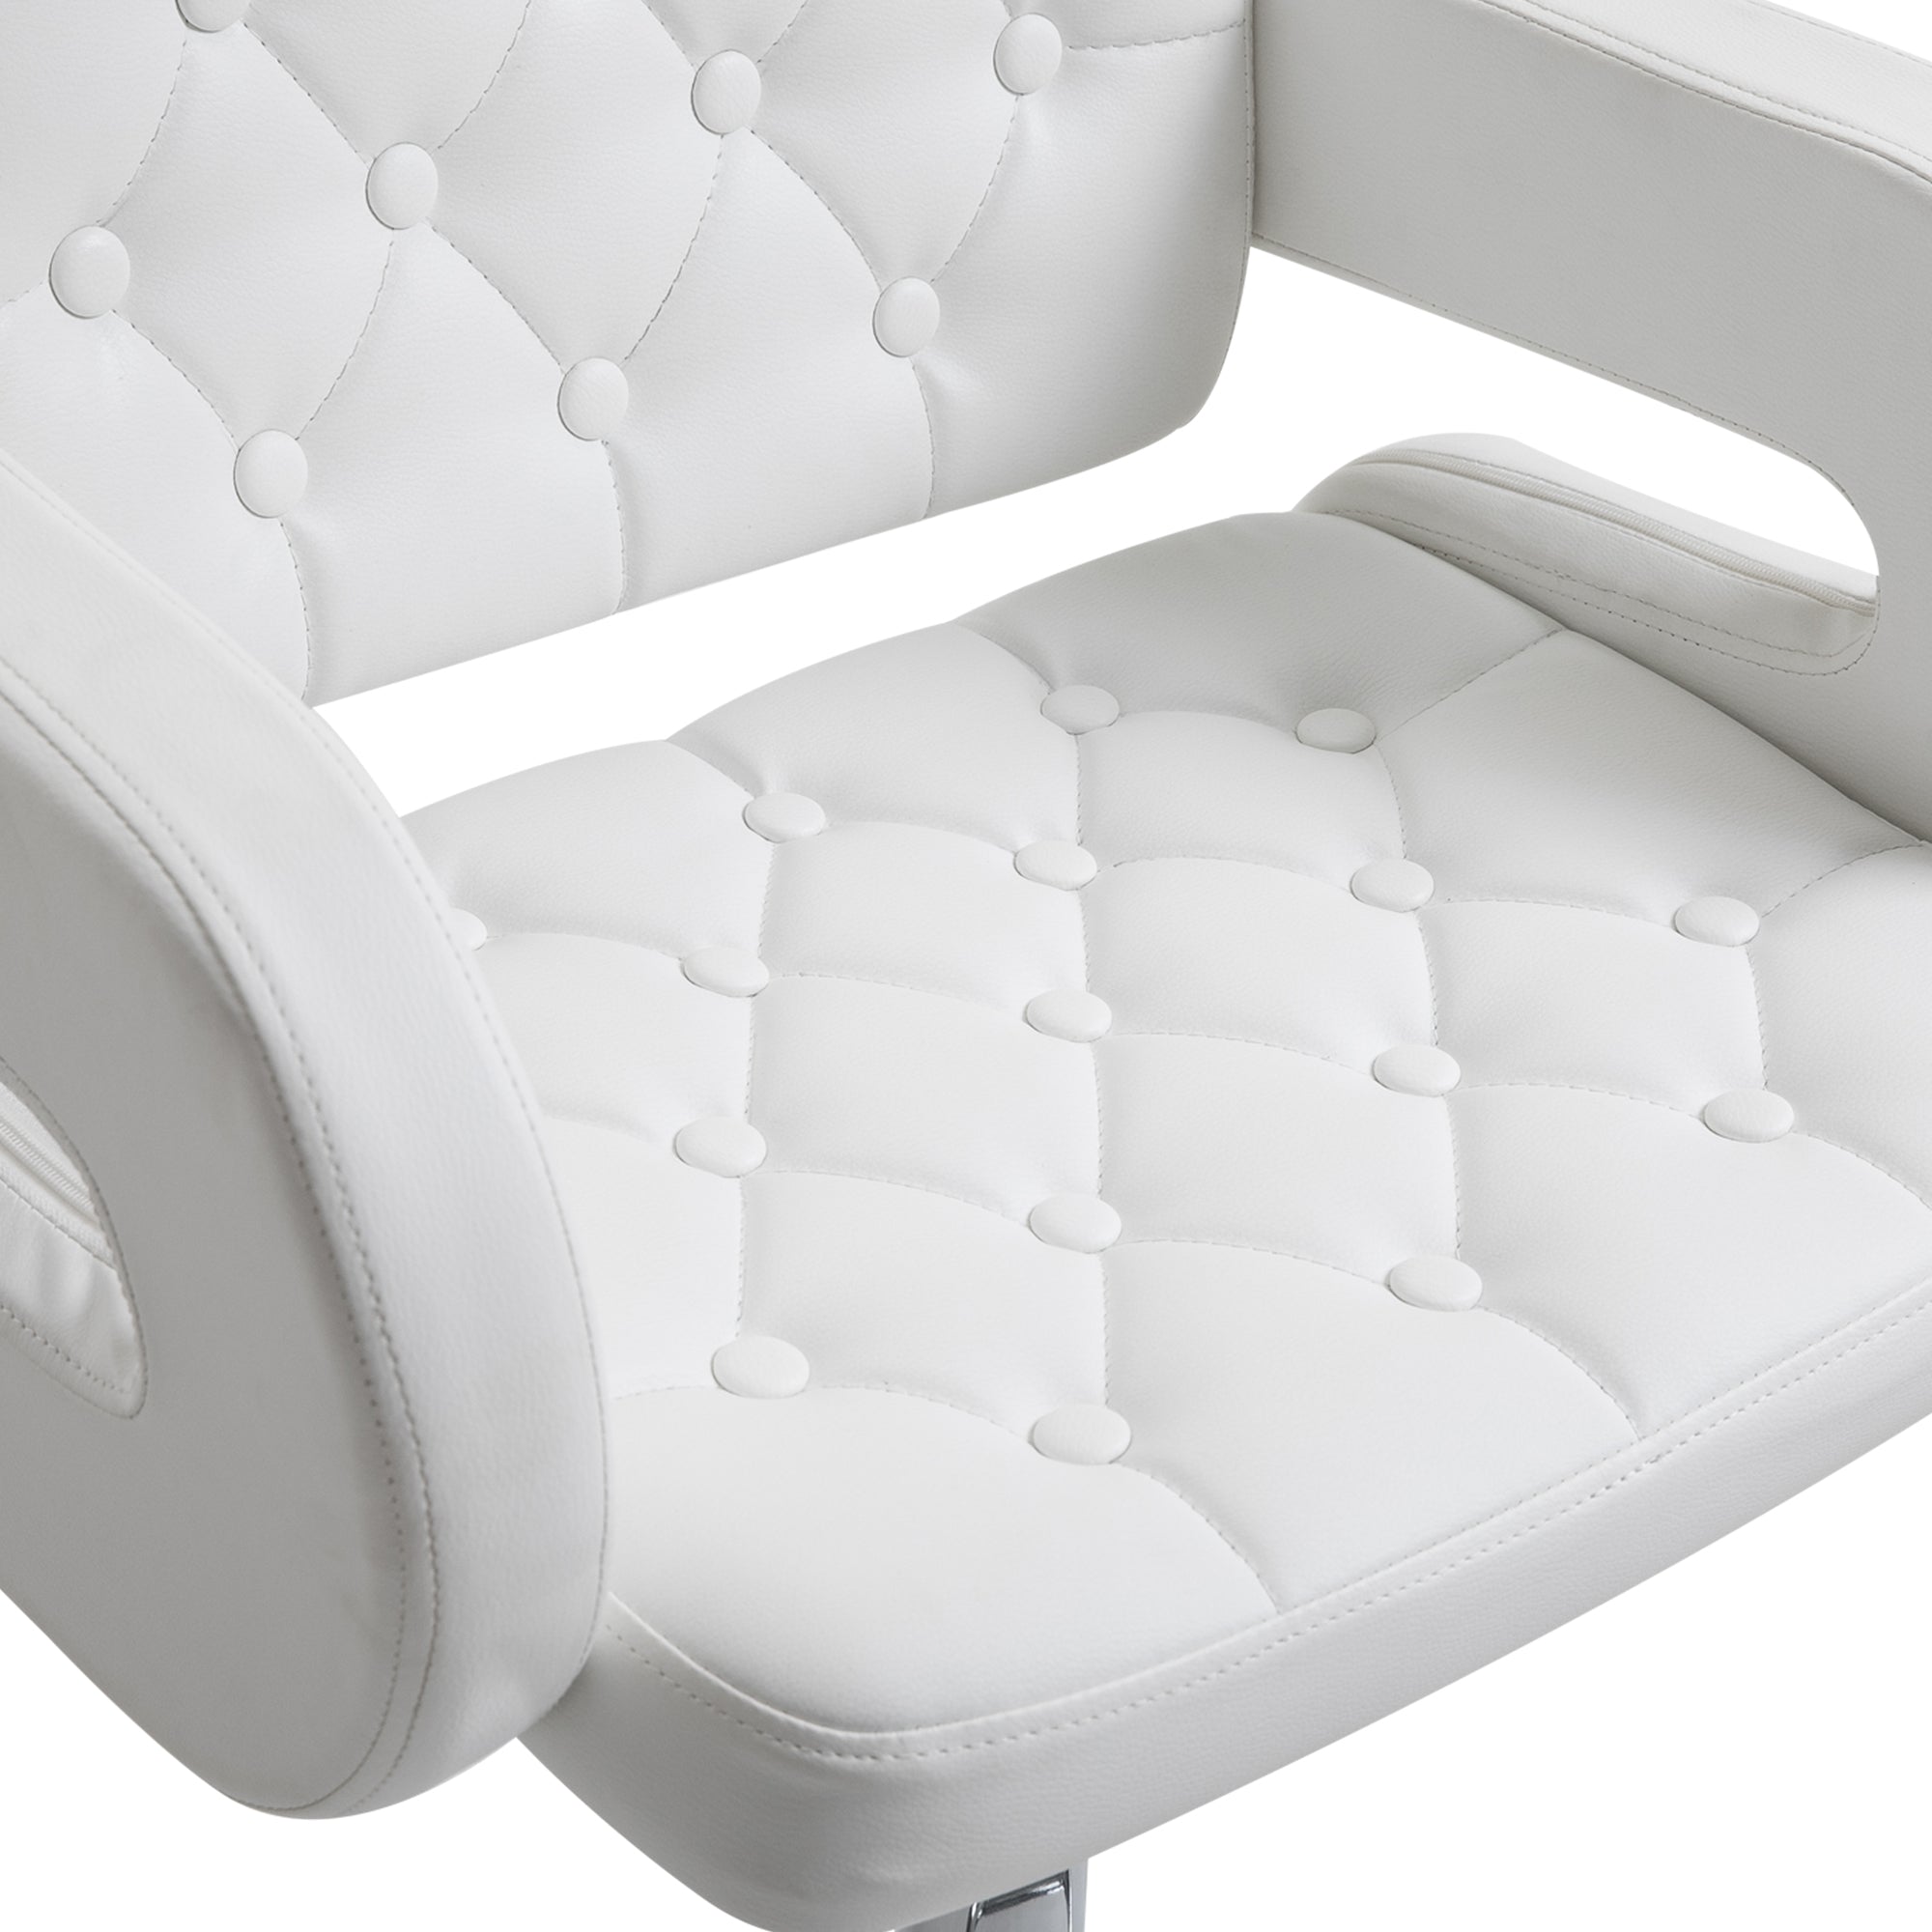 PU Leather Upholstered Swivel Bar Stool, Height Adjustable Barstool with Back, Armrest, Footrest for Kitchen  AOSOM   